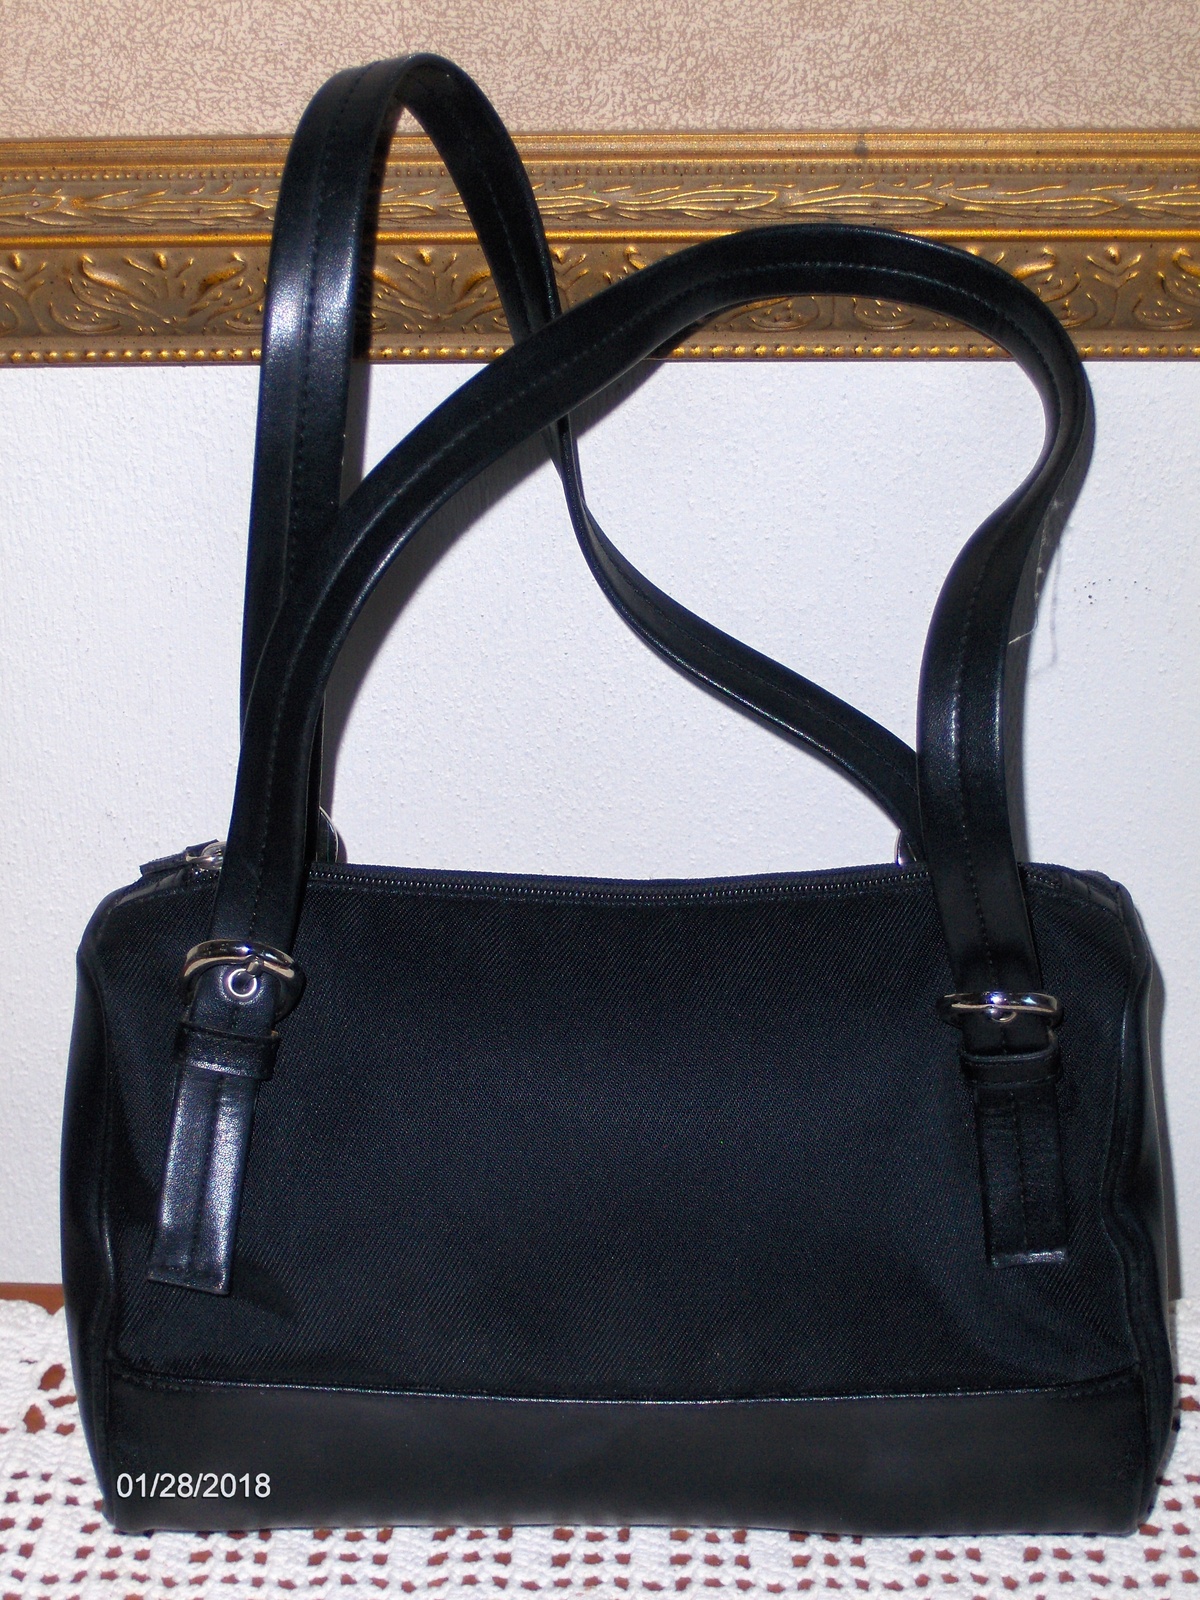 CITY DKNY Satchel Black Leather Handbag Purse Tote Bag - Purses, Handbags